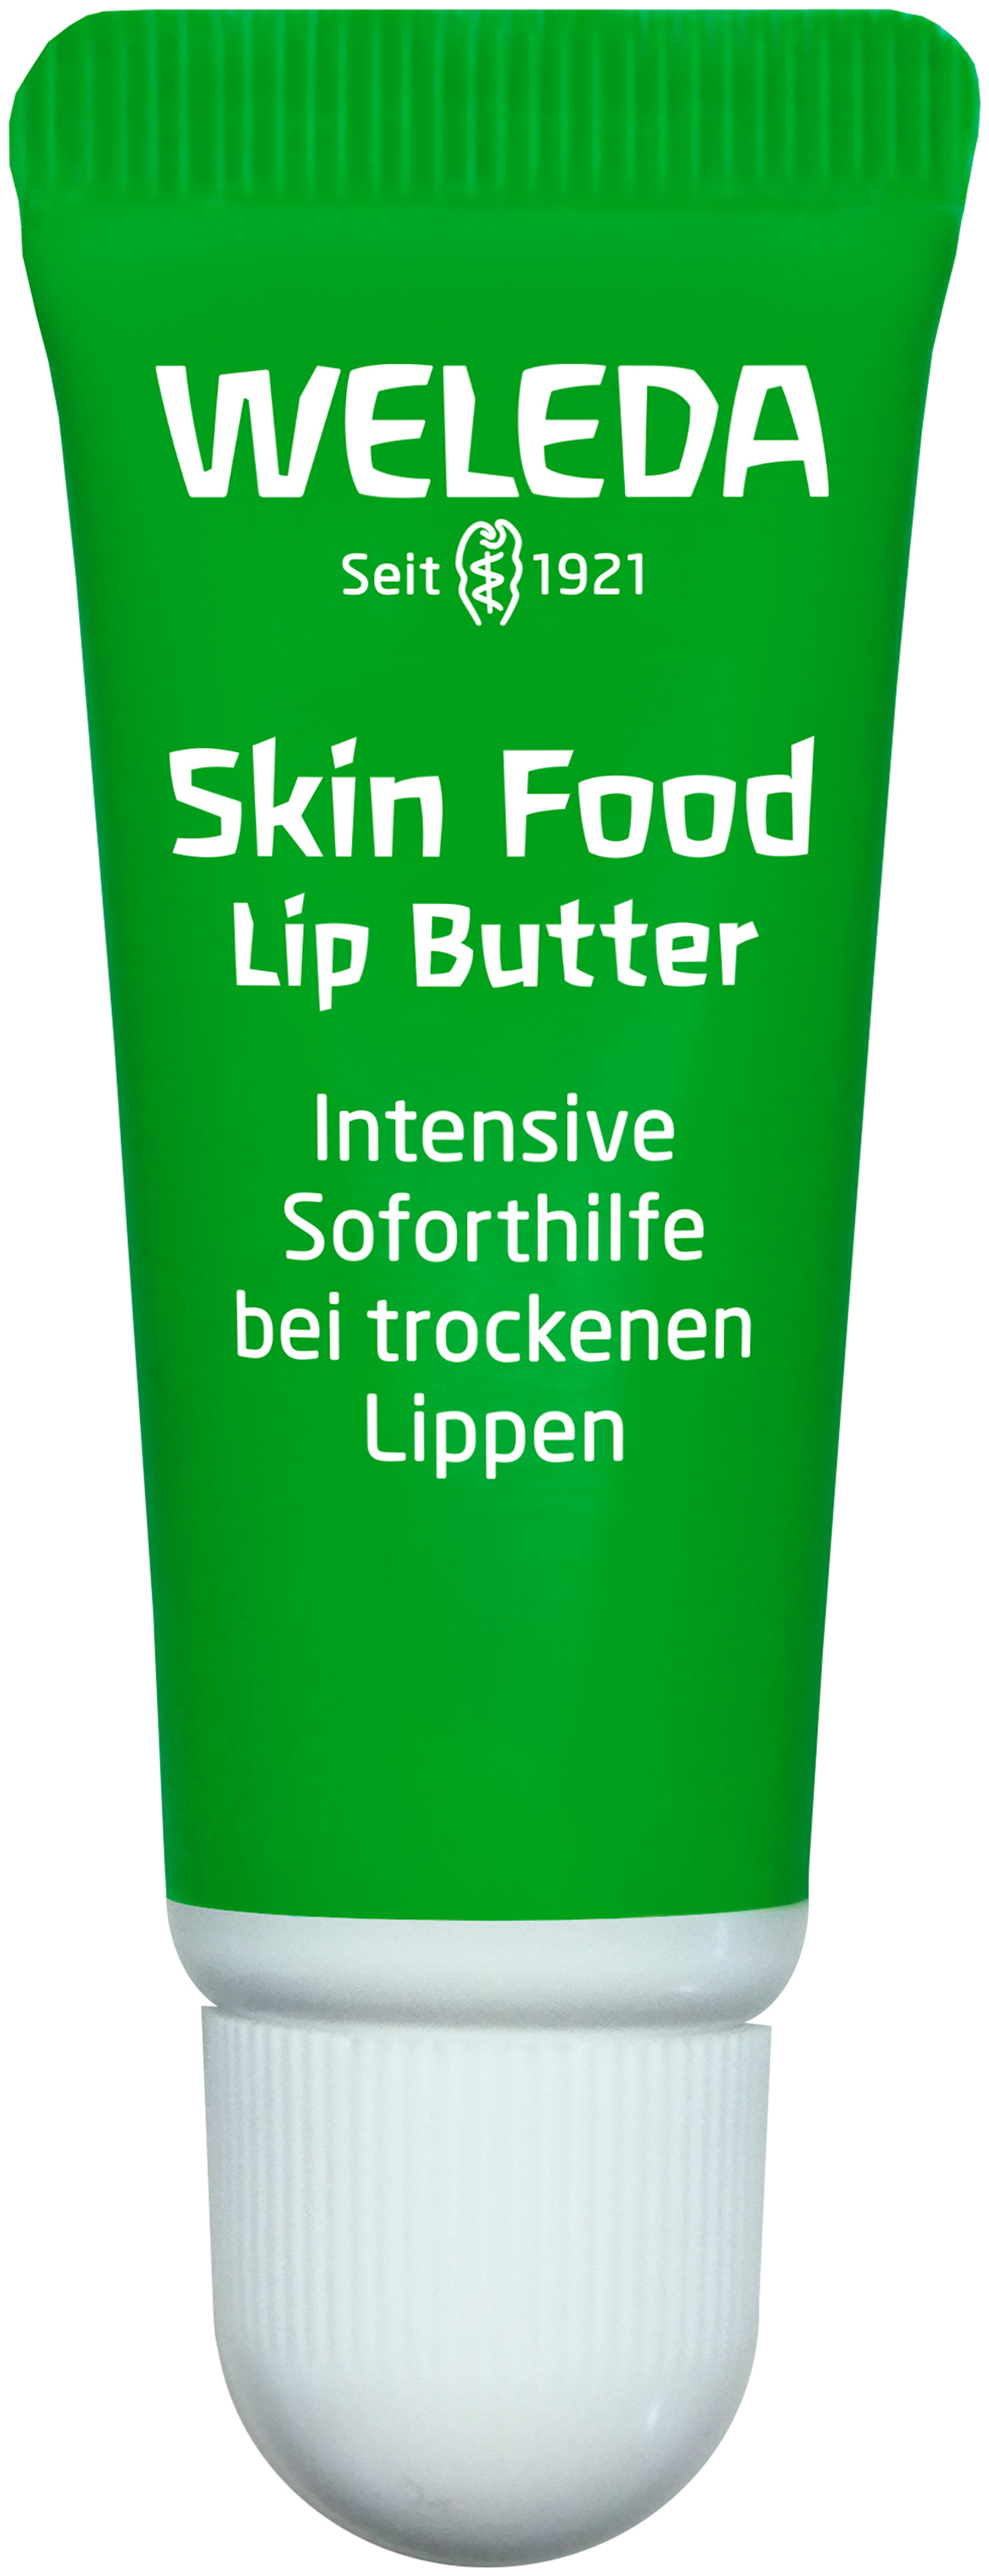 Weleda_Skin Food Lip Butter_8 ml_CTU